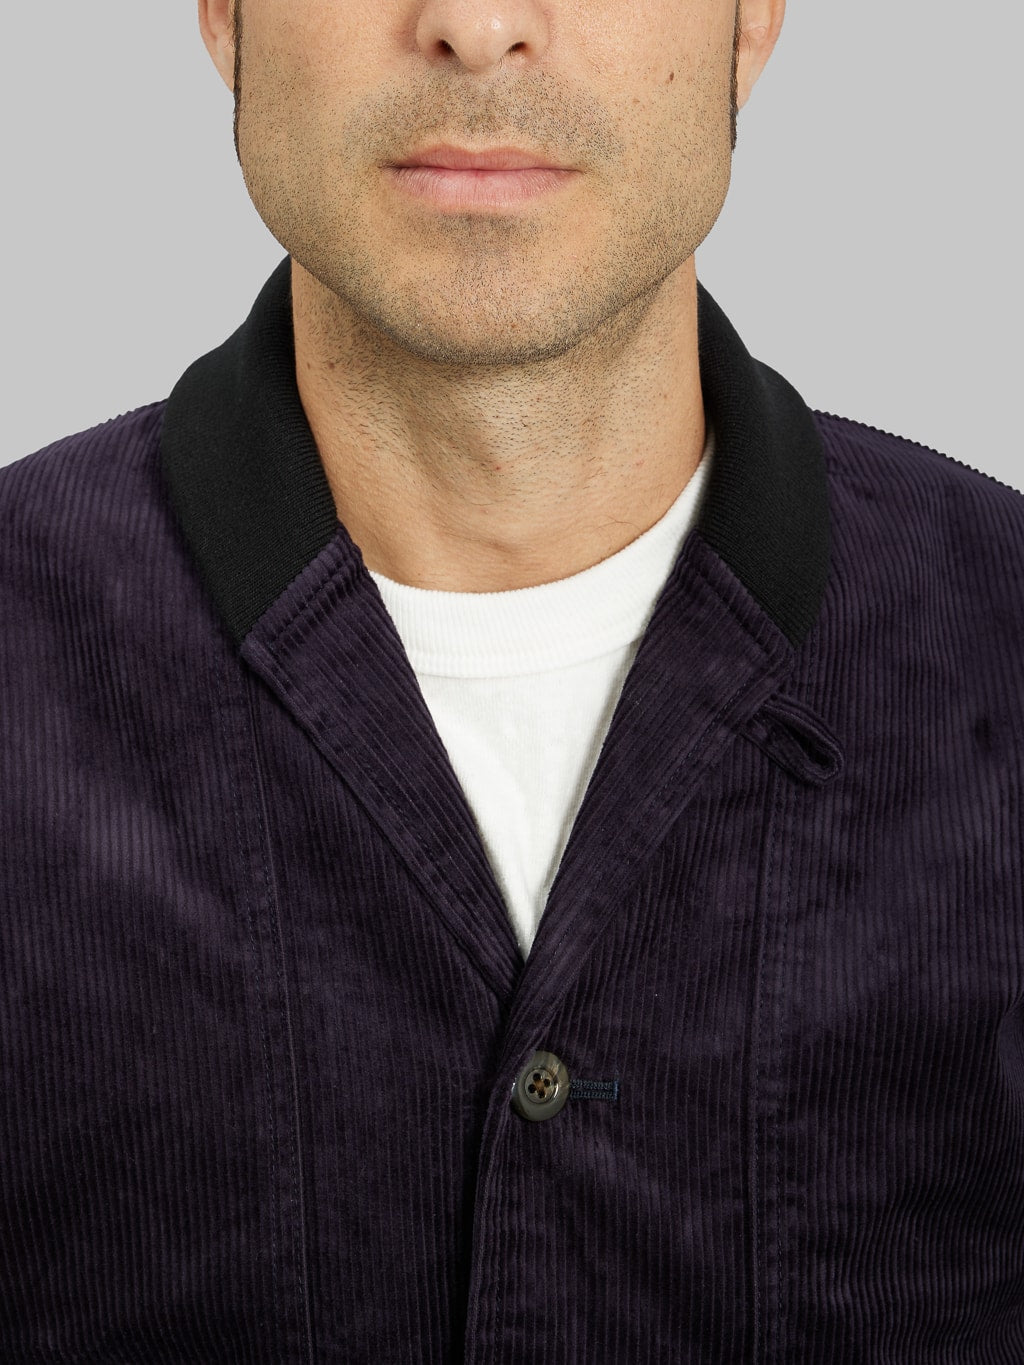 Tanuki Sazanami Corduroy natural indigo dyed Jacket  shawl collar